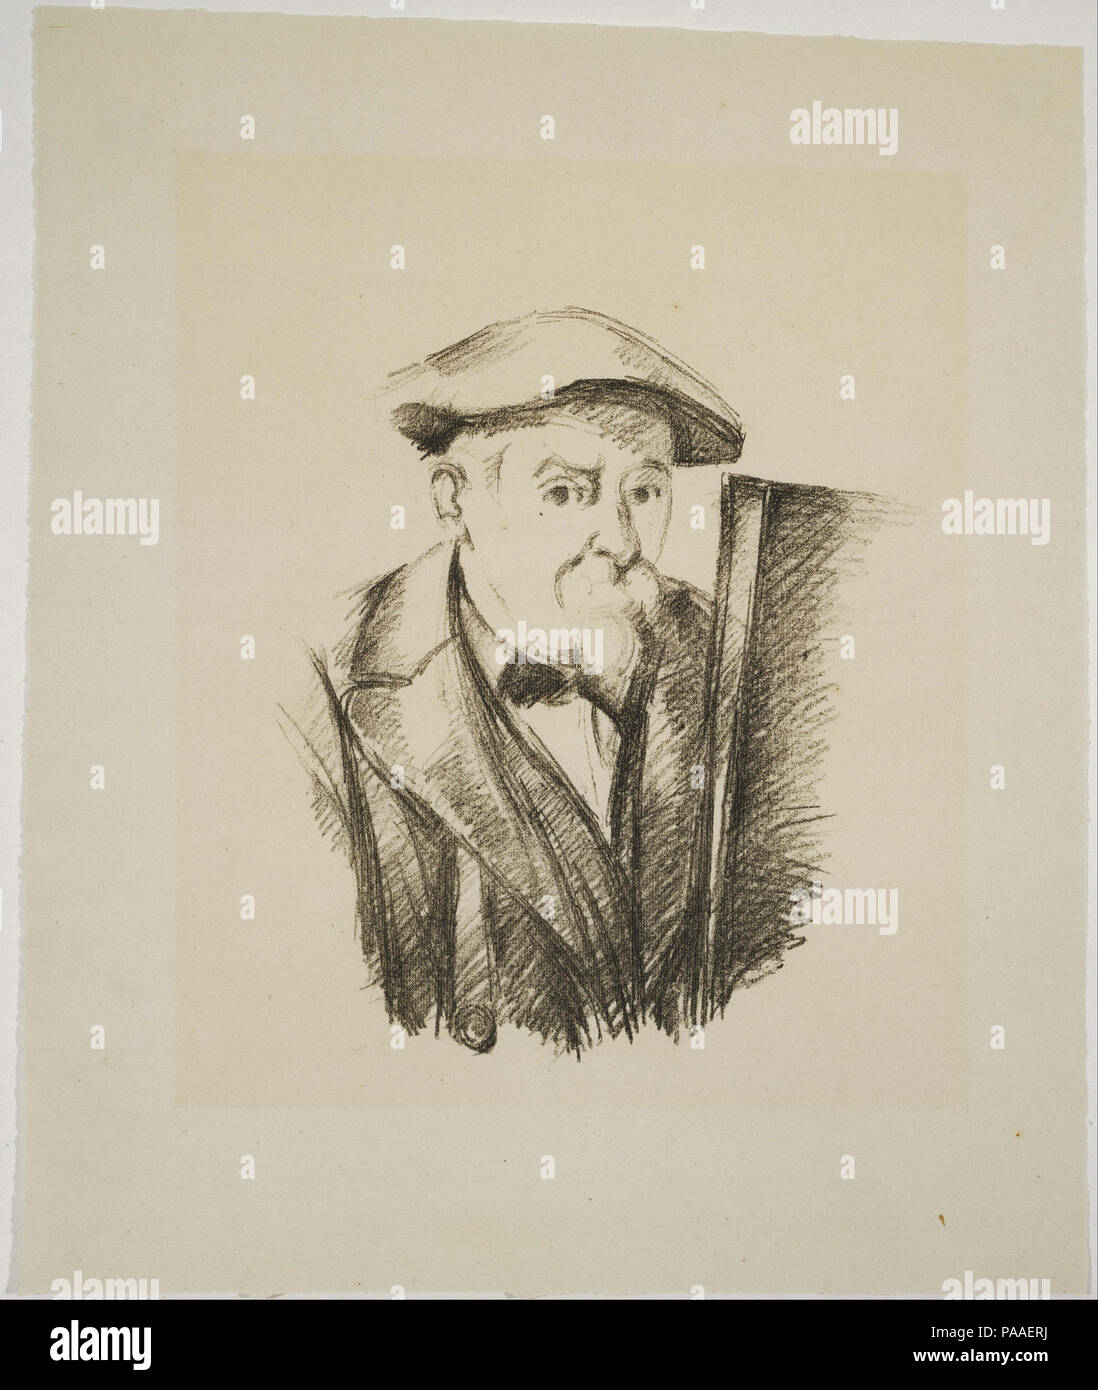 193 Paul Cézanne - Self-Portrait -  (27718094) Stock Photo